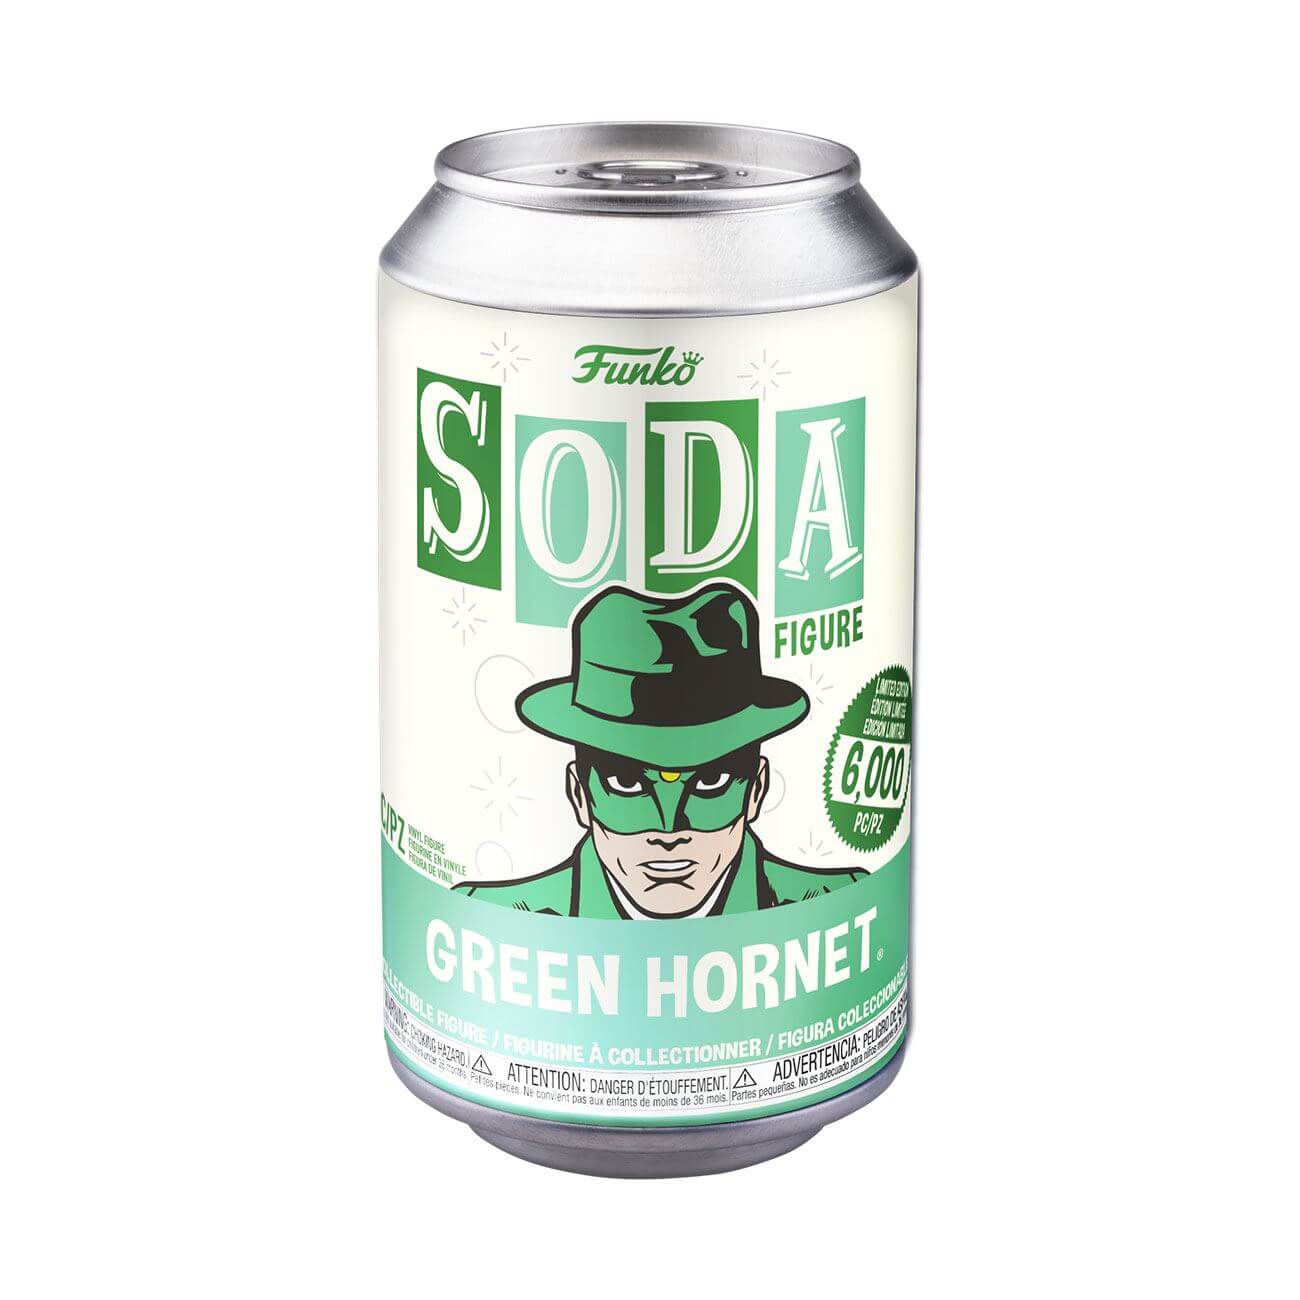 "Green Hornet Vinyl Soda Figure in Collector Can"